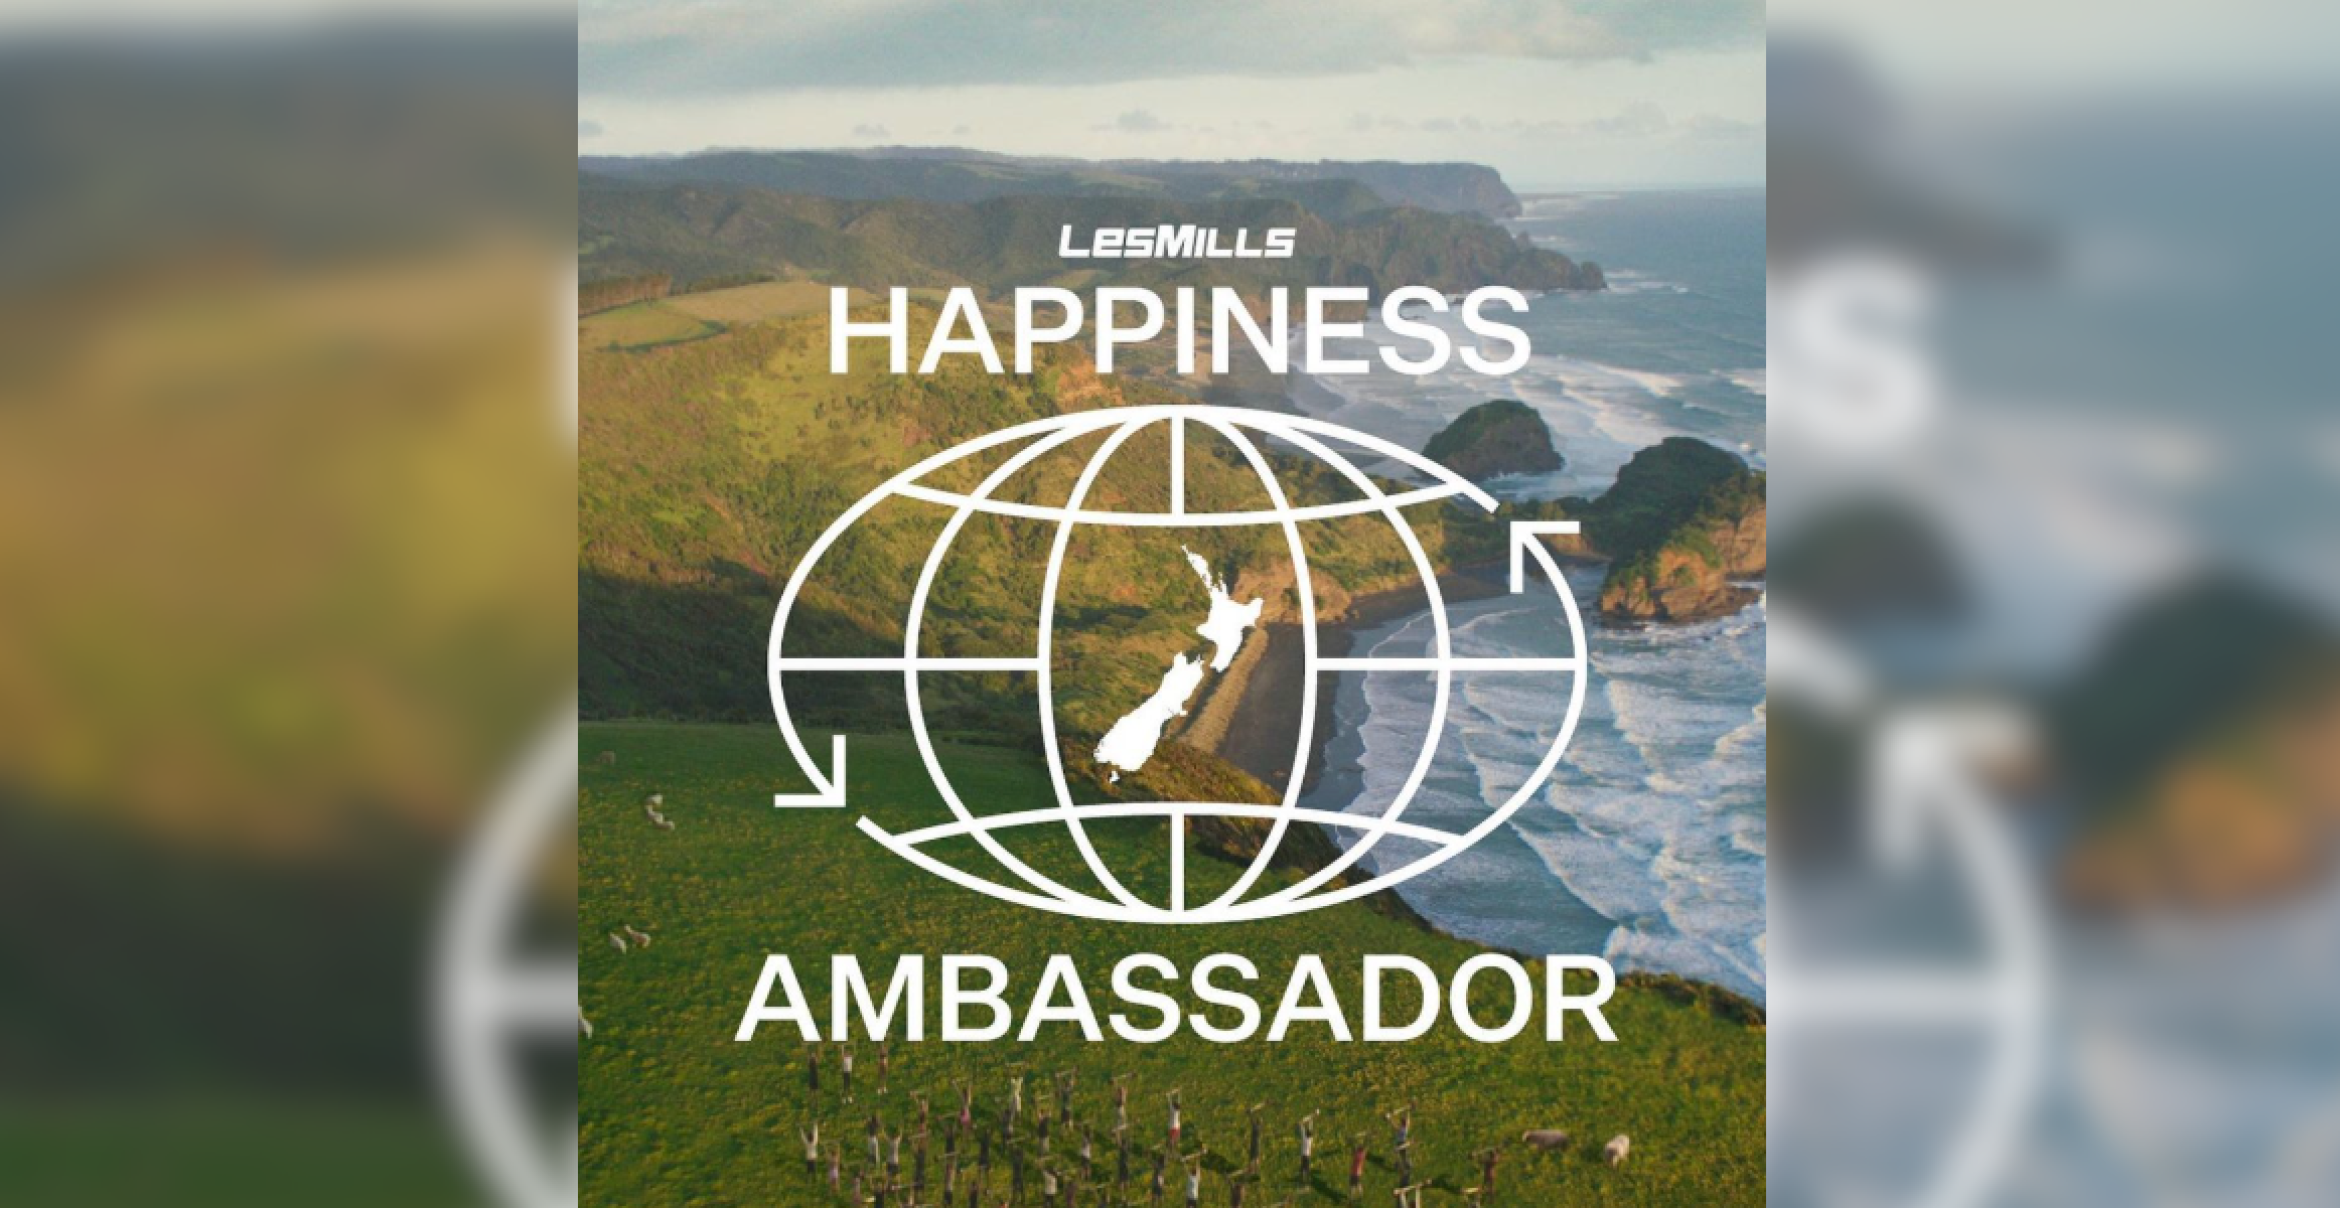 Job des Tages: Happiness Ambassador für Les Mills in Neuseeland gesucht